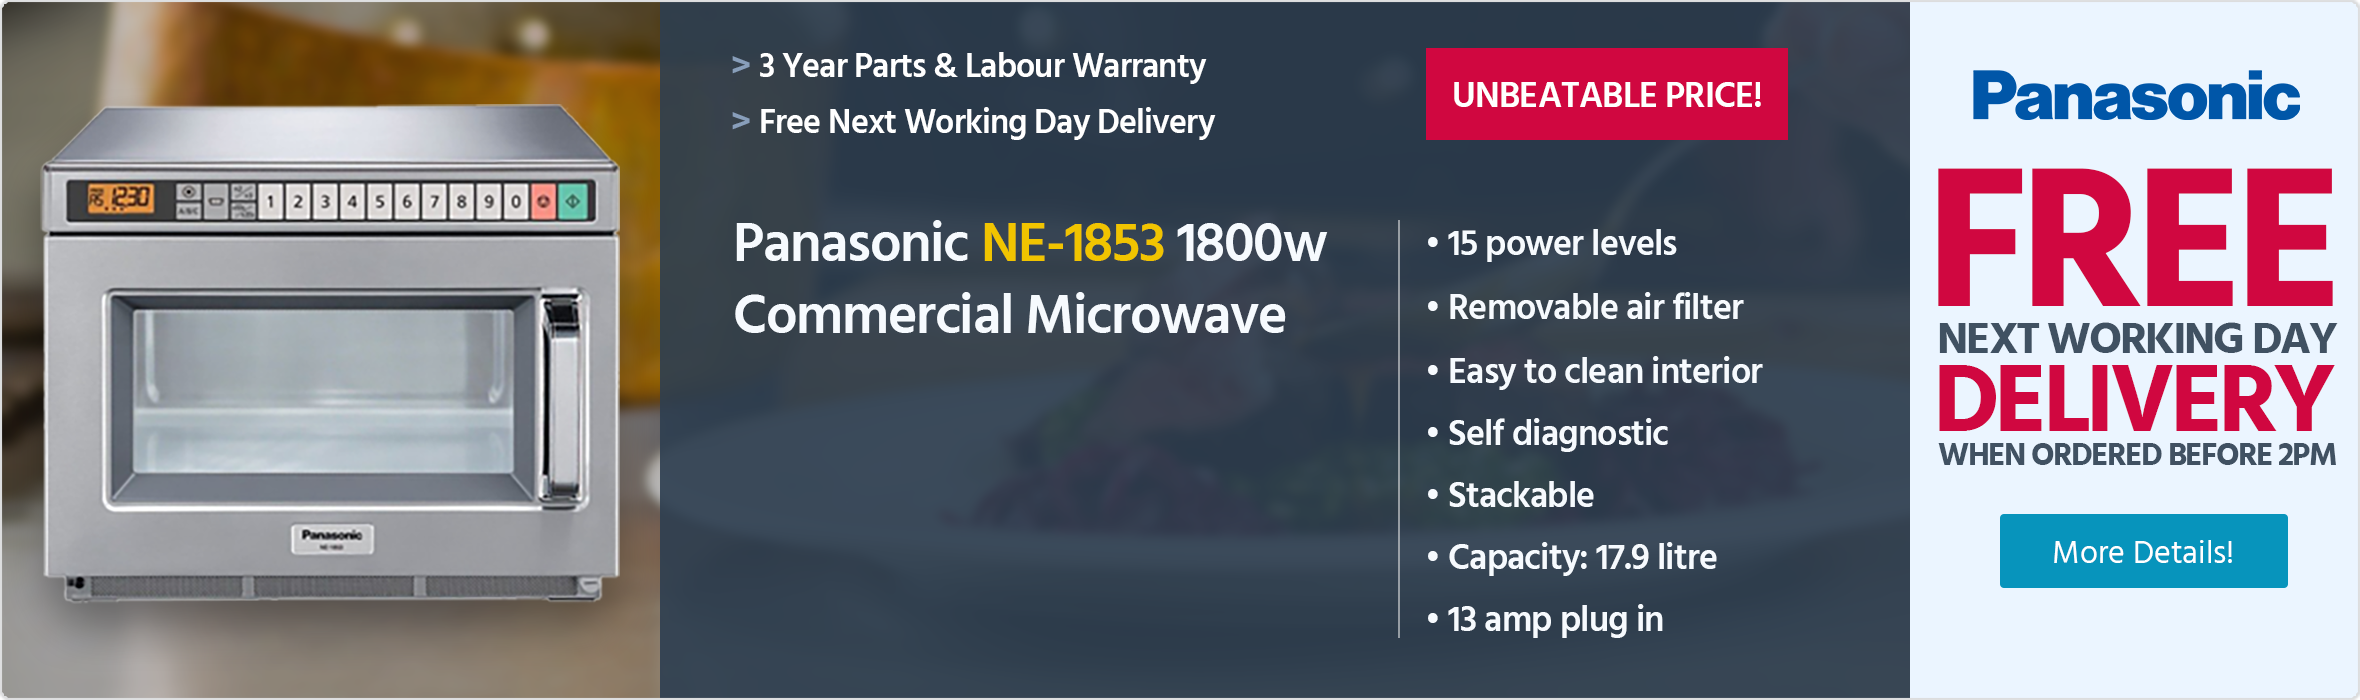 Panasonic NE-1853 1800w Commercial Microwave